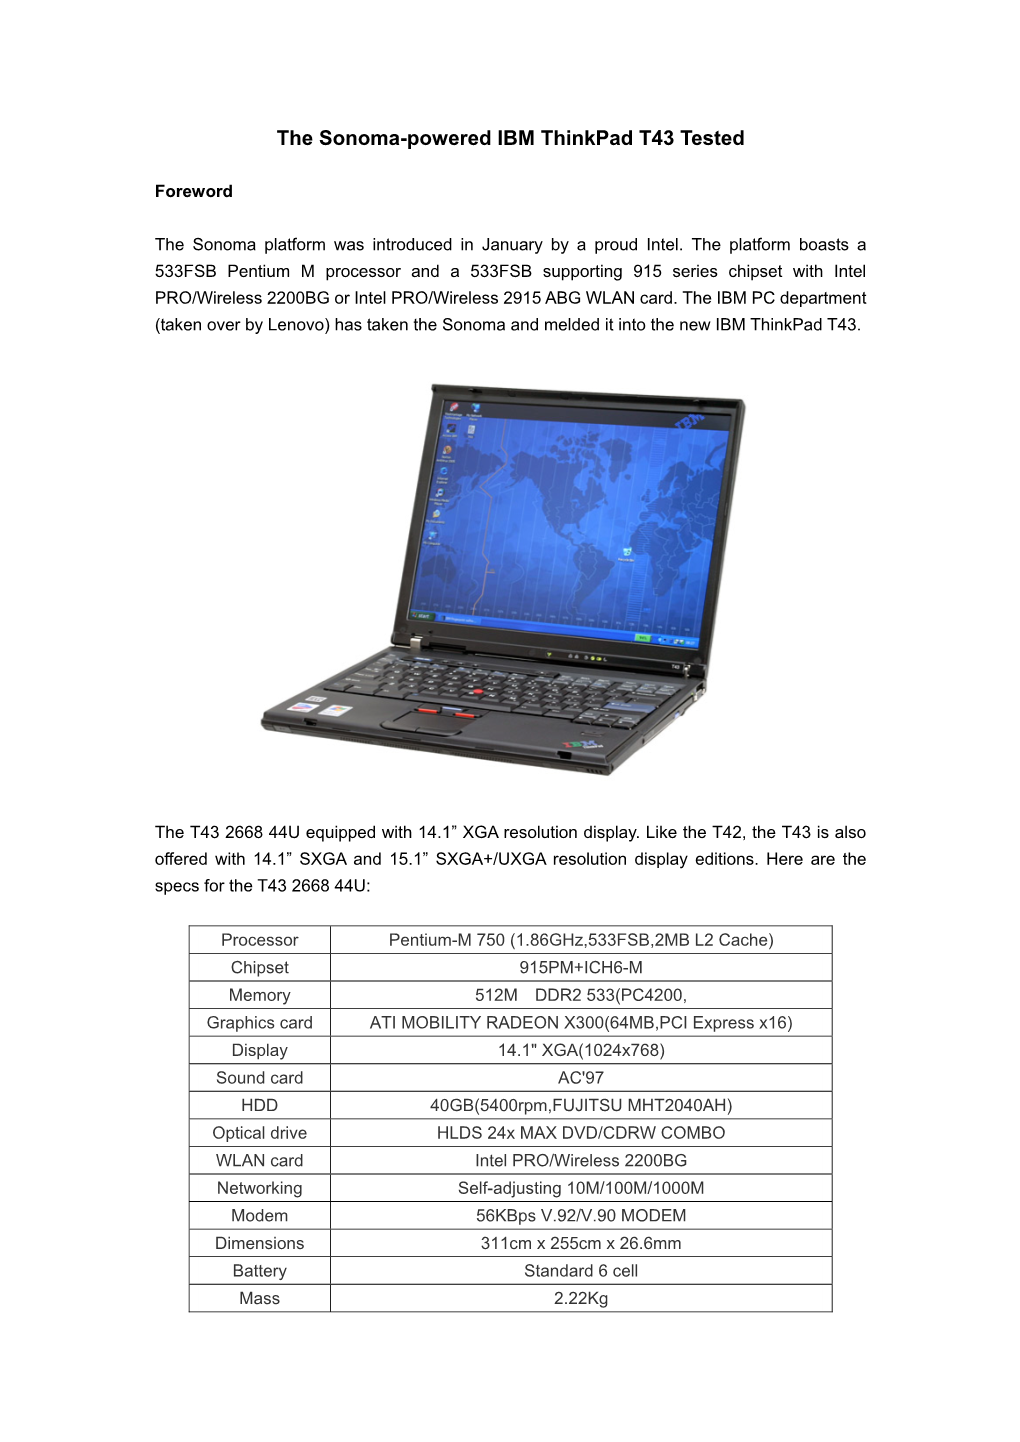 The Sonoma-Powered IBM Thinkpad T43 Tested